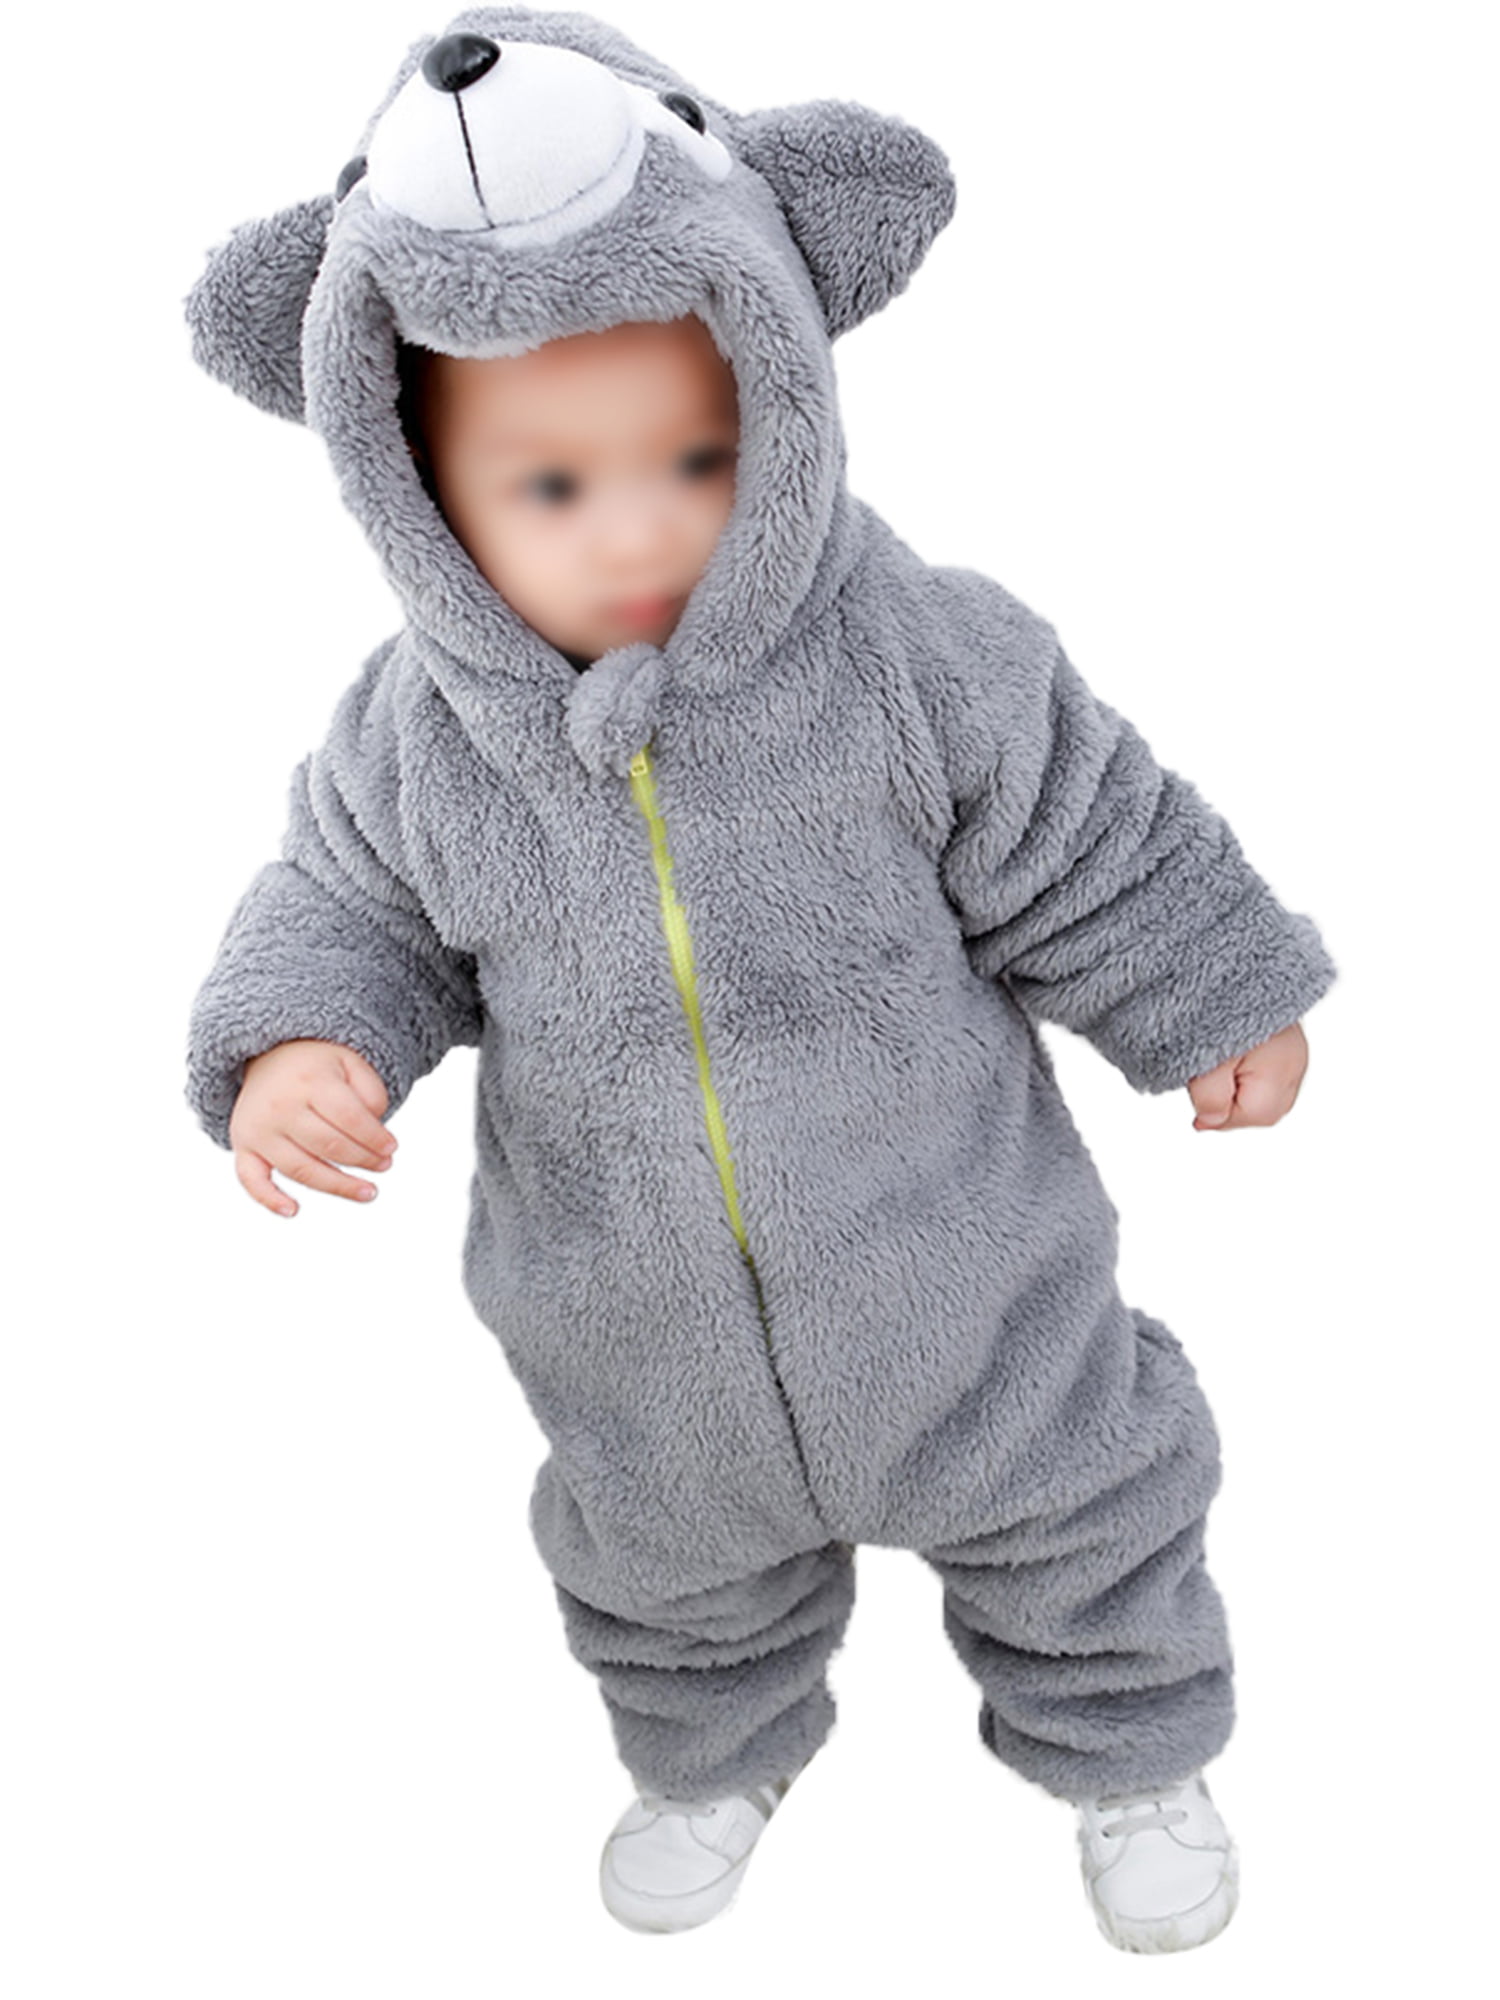 BABY BOY/ GIRL Fleece Body Suit All In One Hood Ears Animal Themed Playsuit 